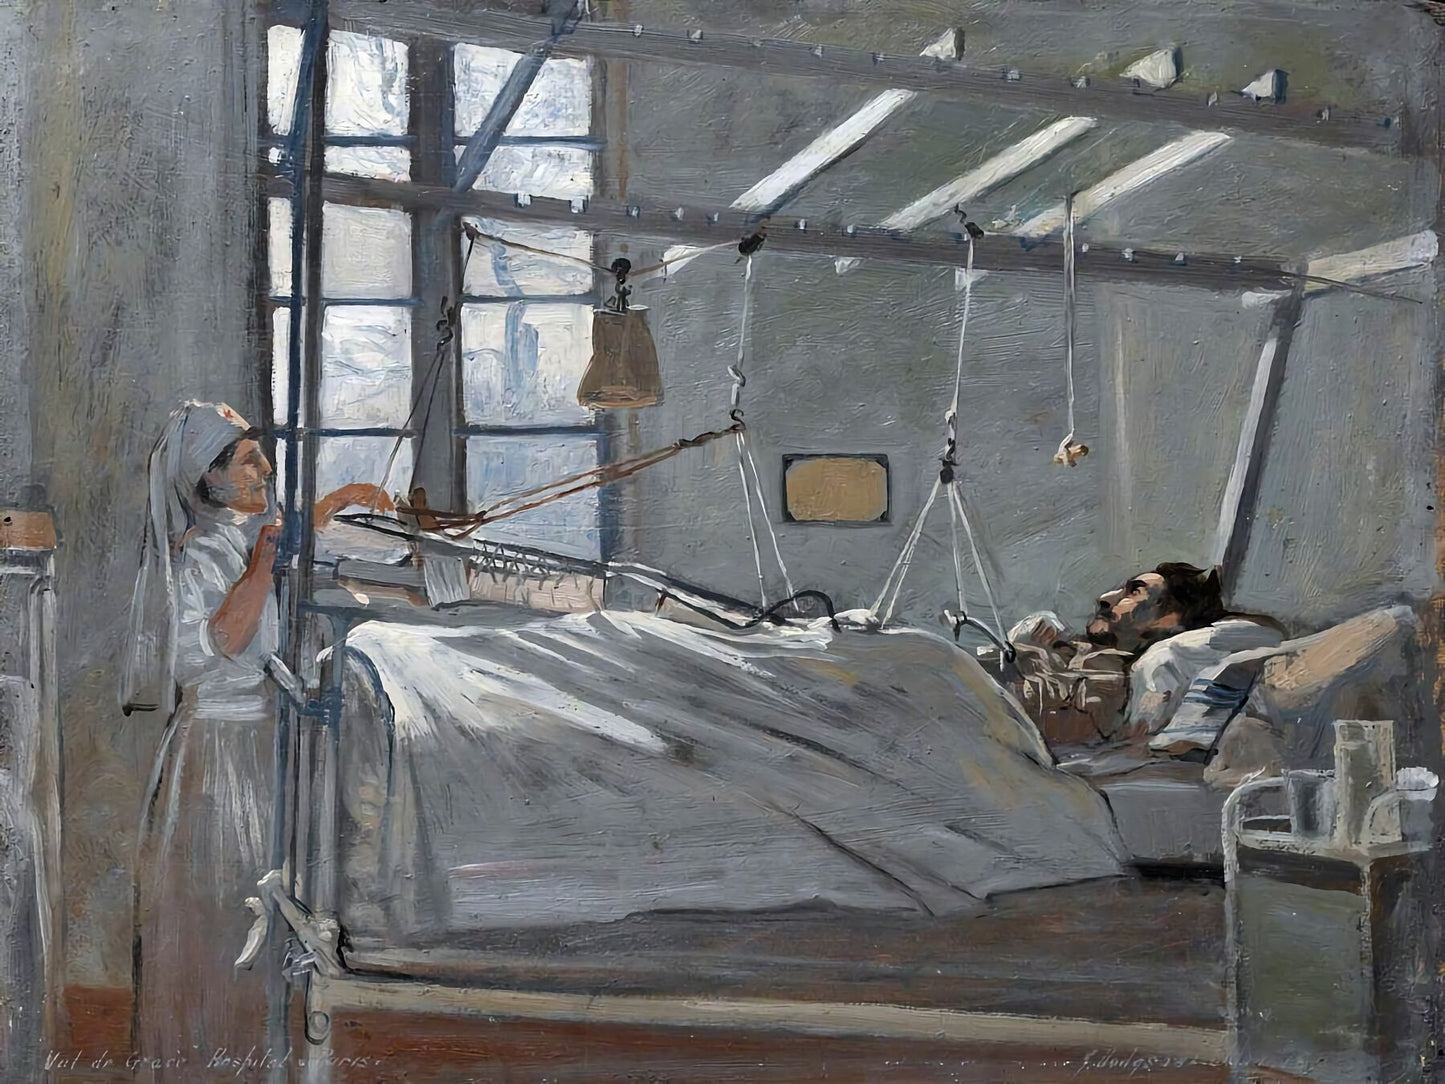 Val de Grâce Hospital, Paris by John Hodgson Lobley - 1918